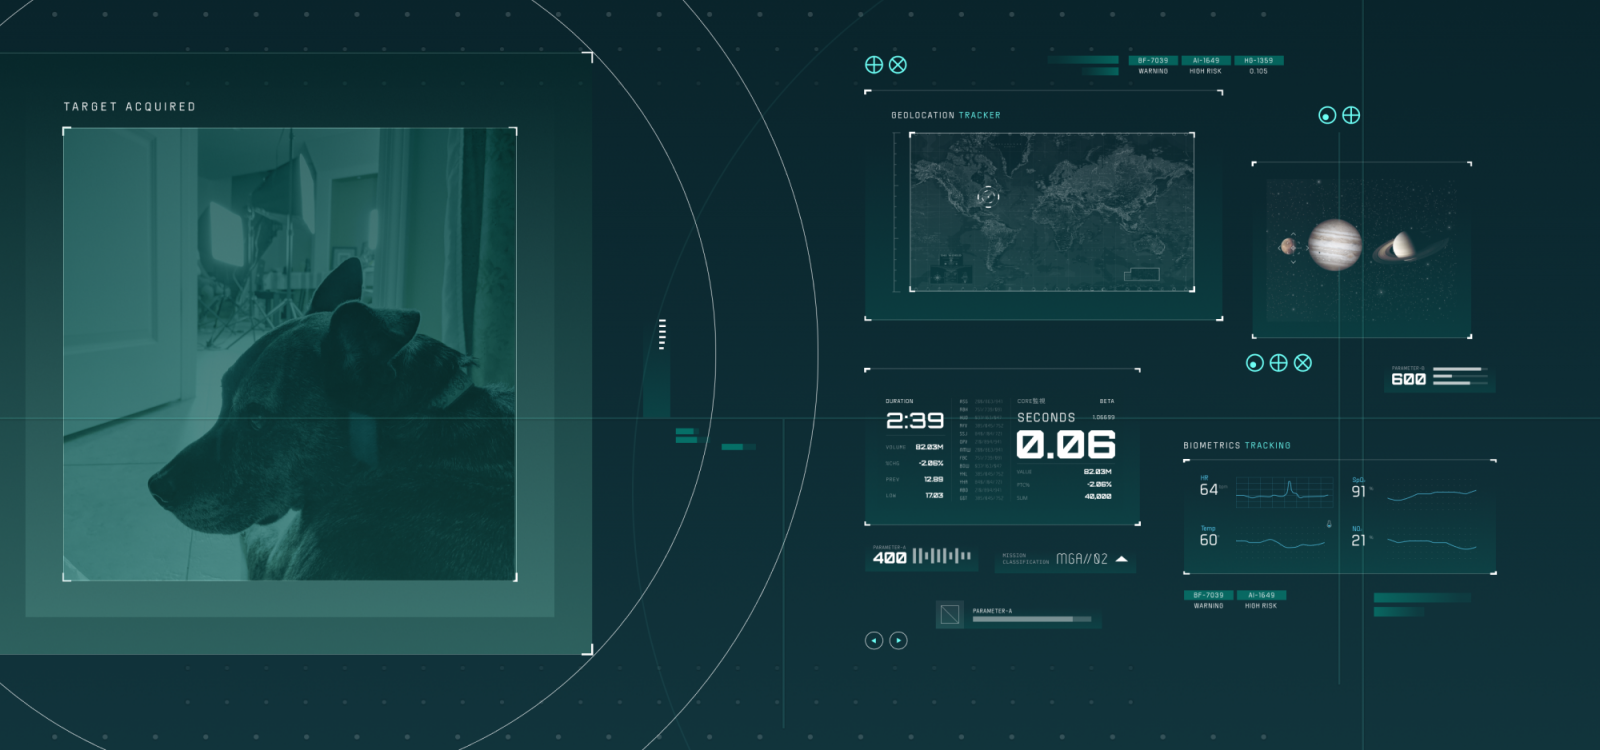 Agent R - tech, futuristic font for HUD designs & dashboards